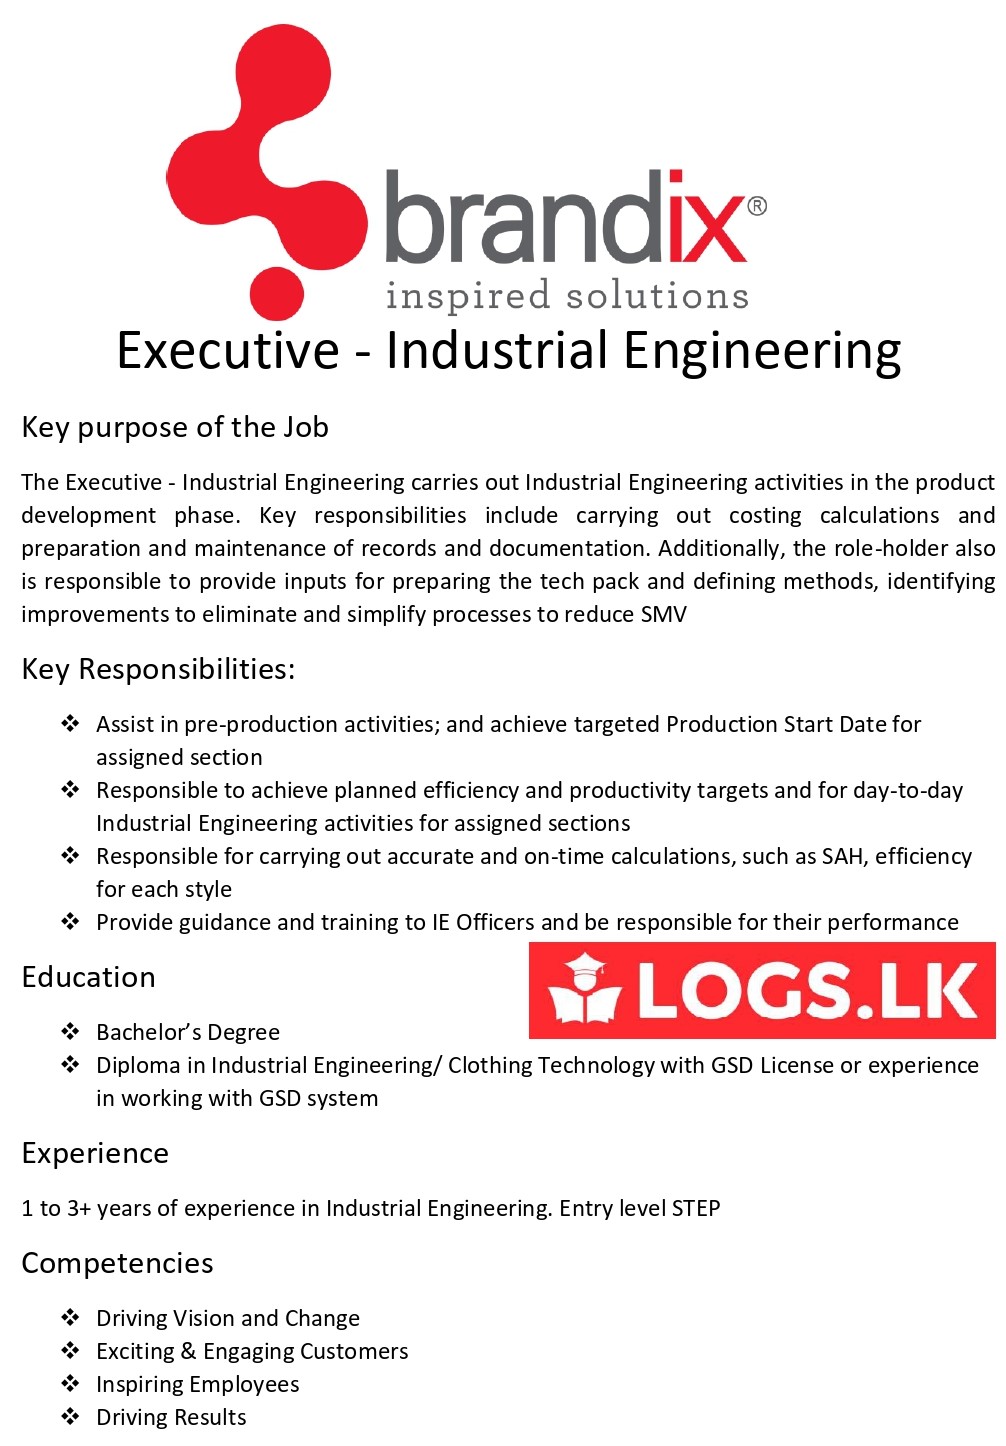 Executive (Industrial Engineering) Vacancy - Brandix Sri Lanka Jobs Vacancies Details